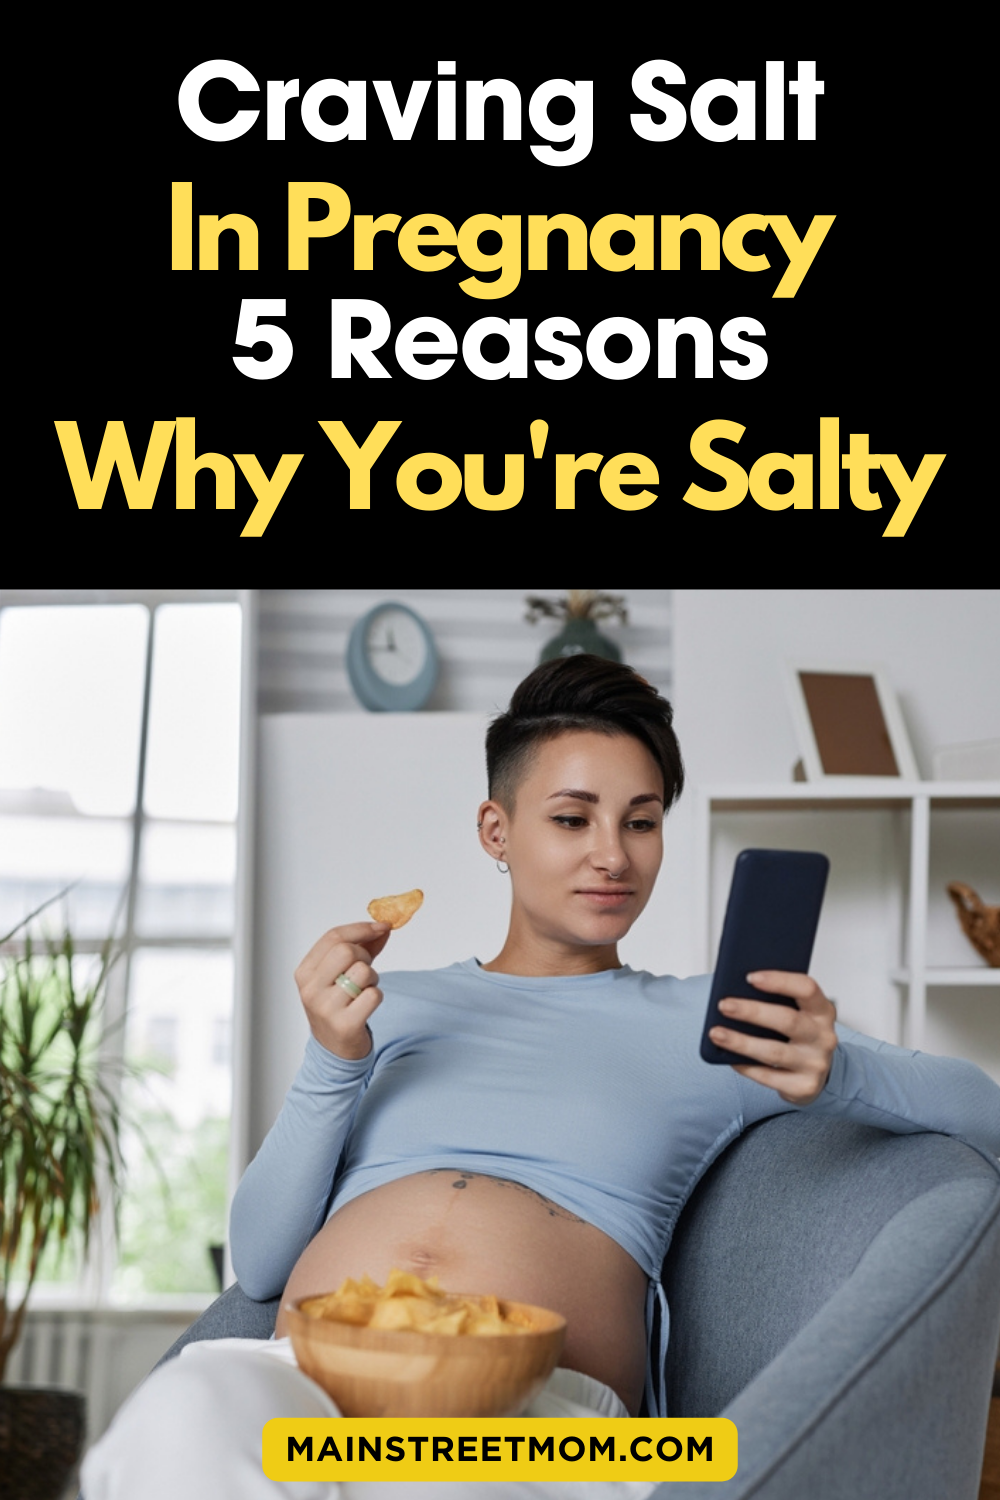 Craving Salt In Pregnancy: 5 Reasons Why You're Salty